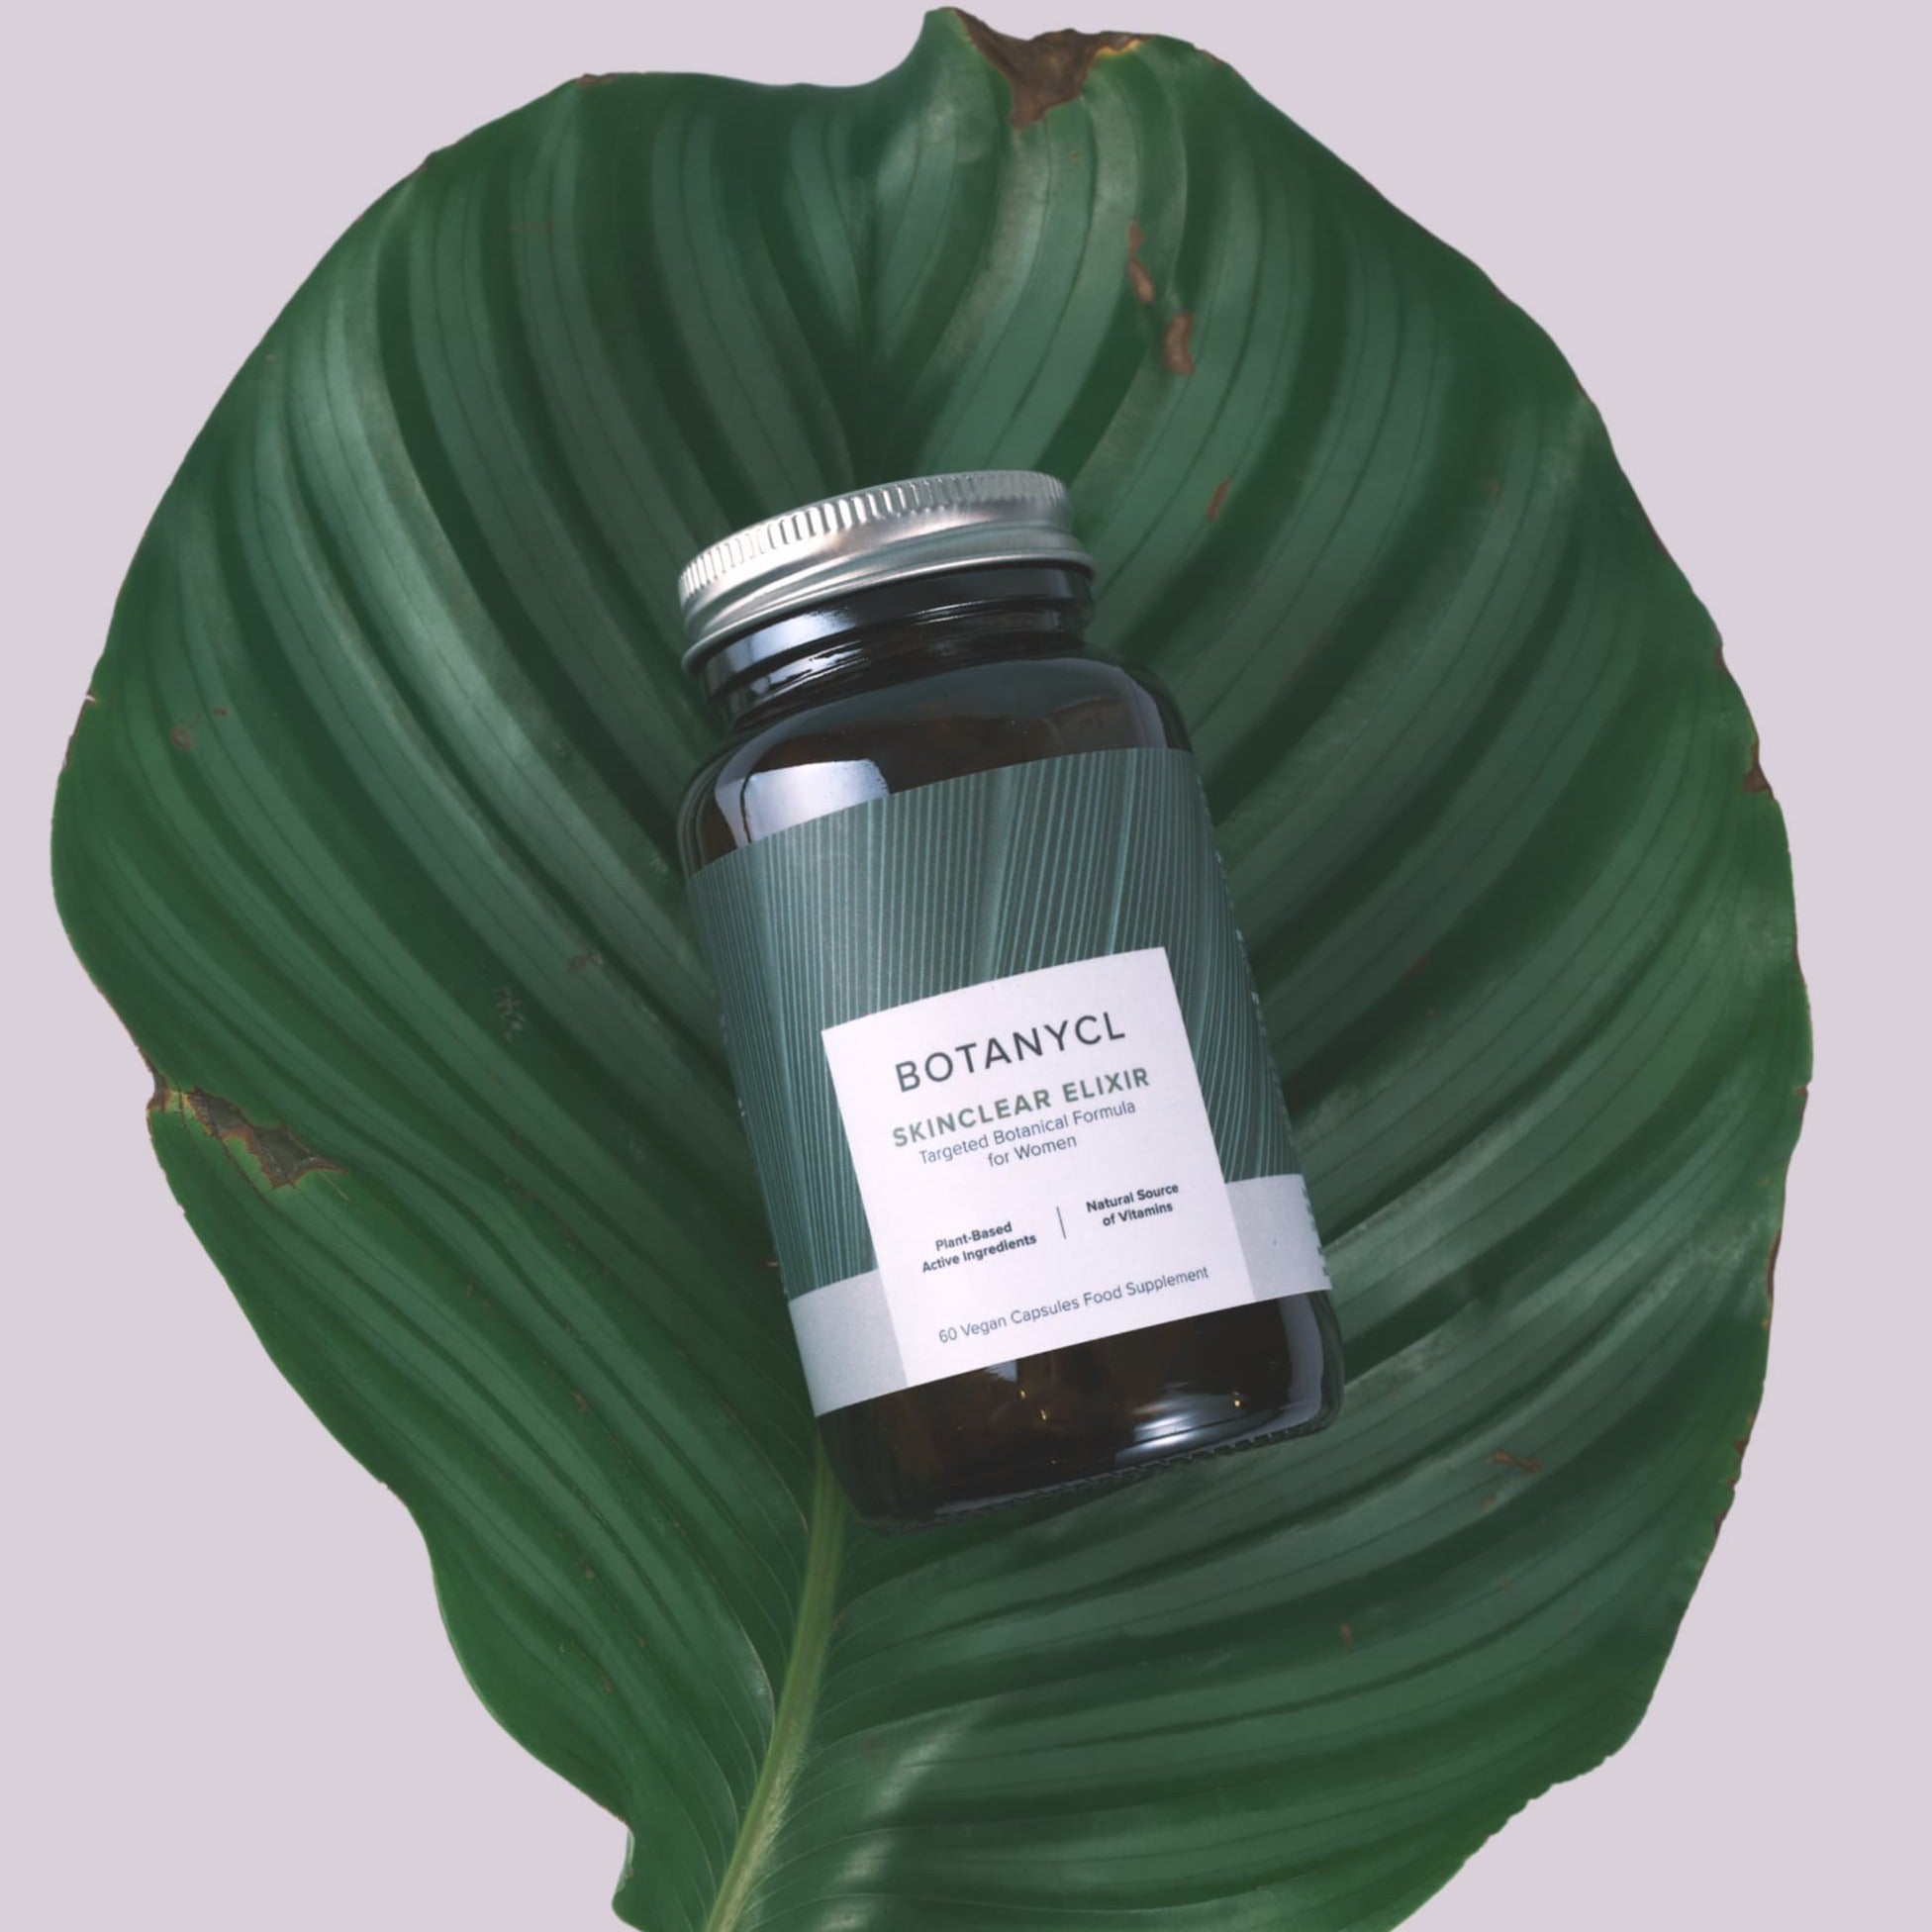 Botanycl SkinClear Elixir on a green leaf